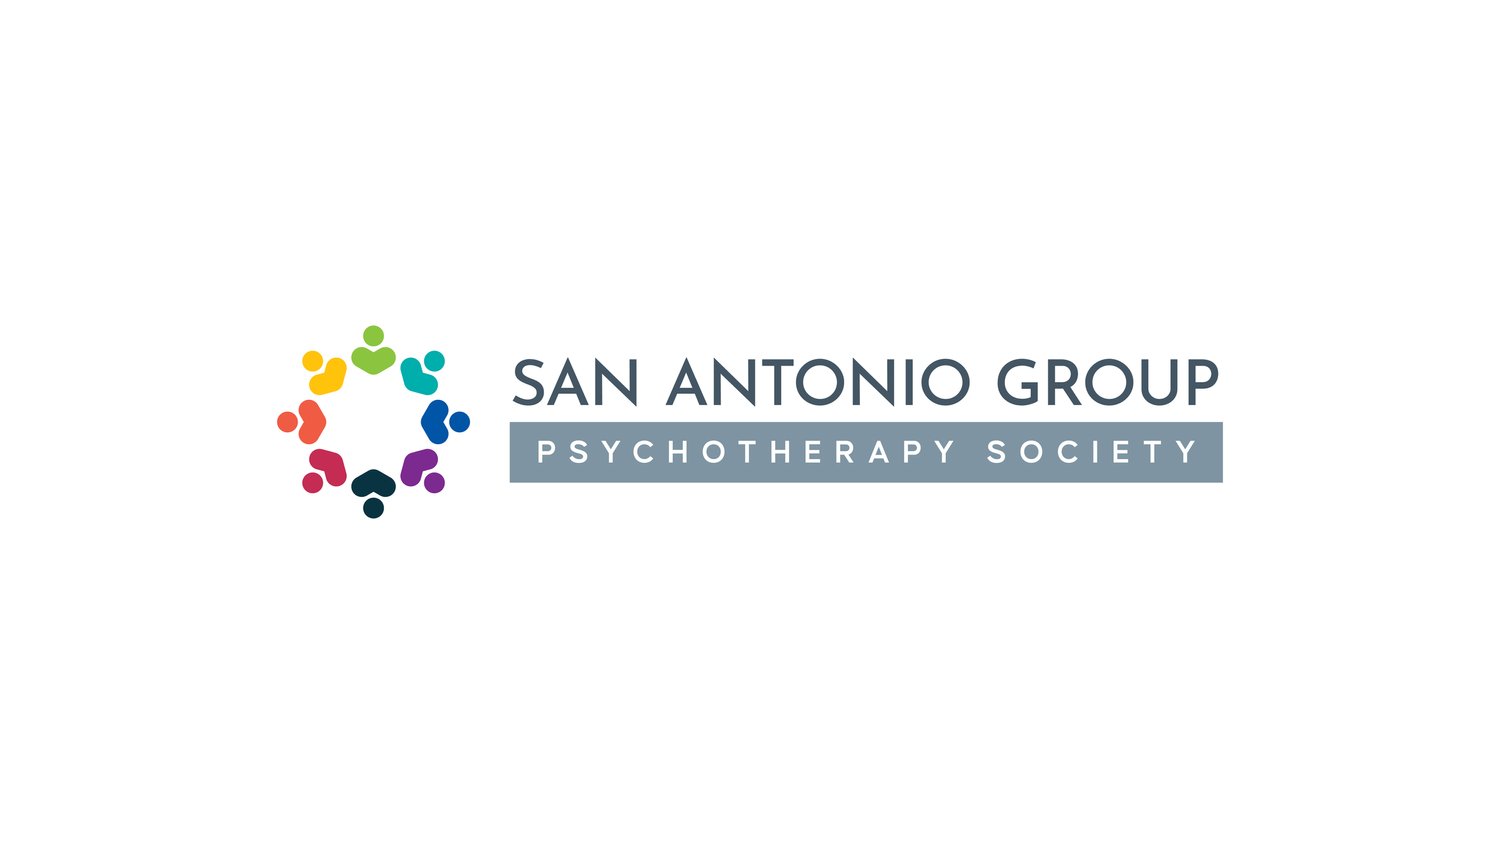 San Antonio Group Psychotherapy Society